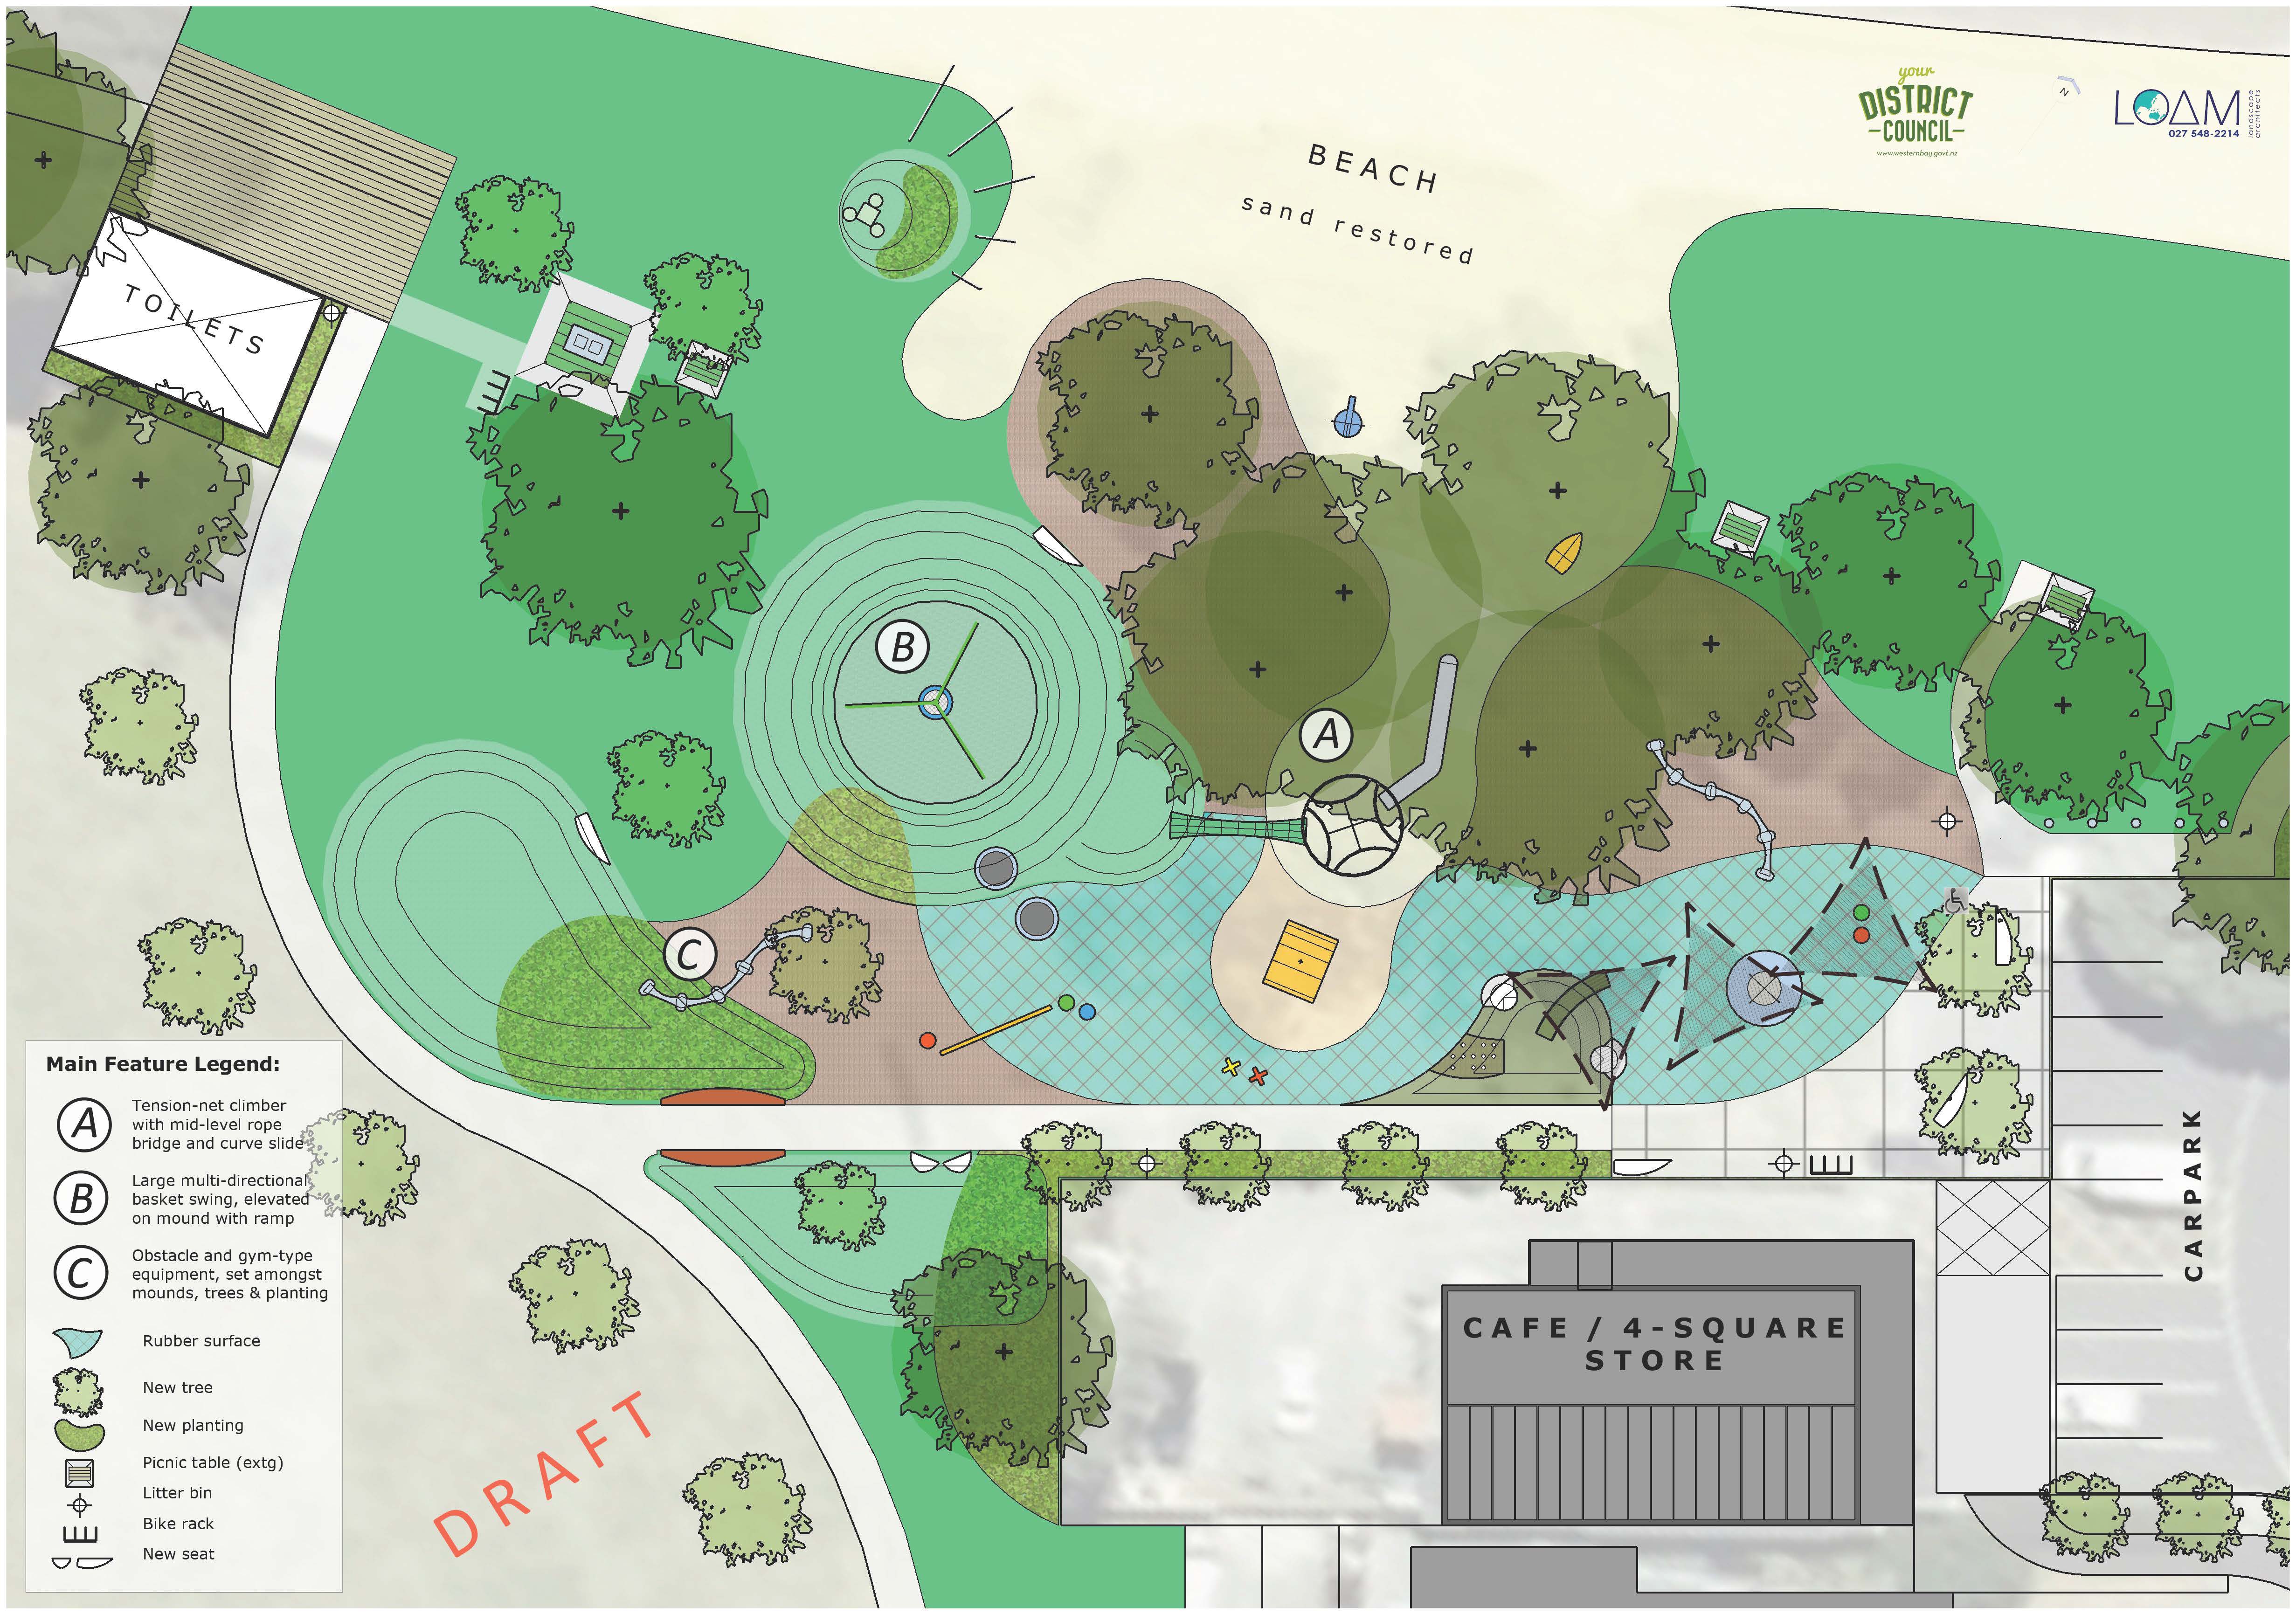 Ōmokoroa Domain playground draft concept plan - select image to download PDF